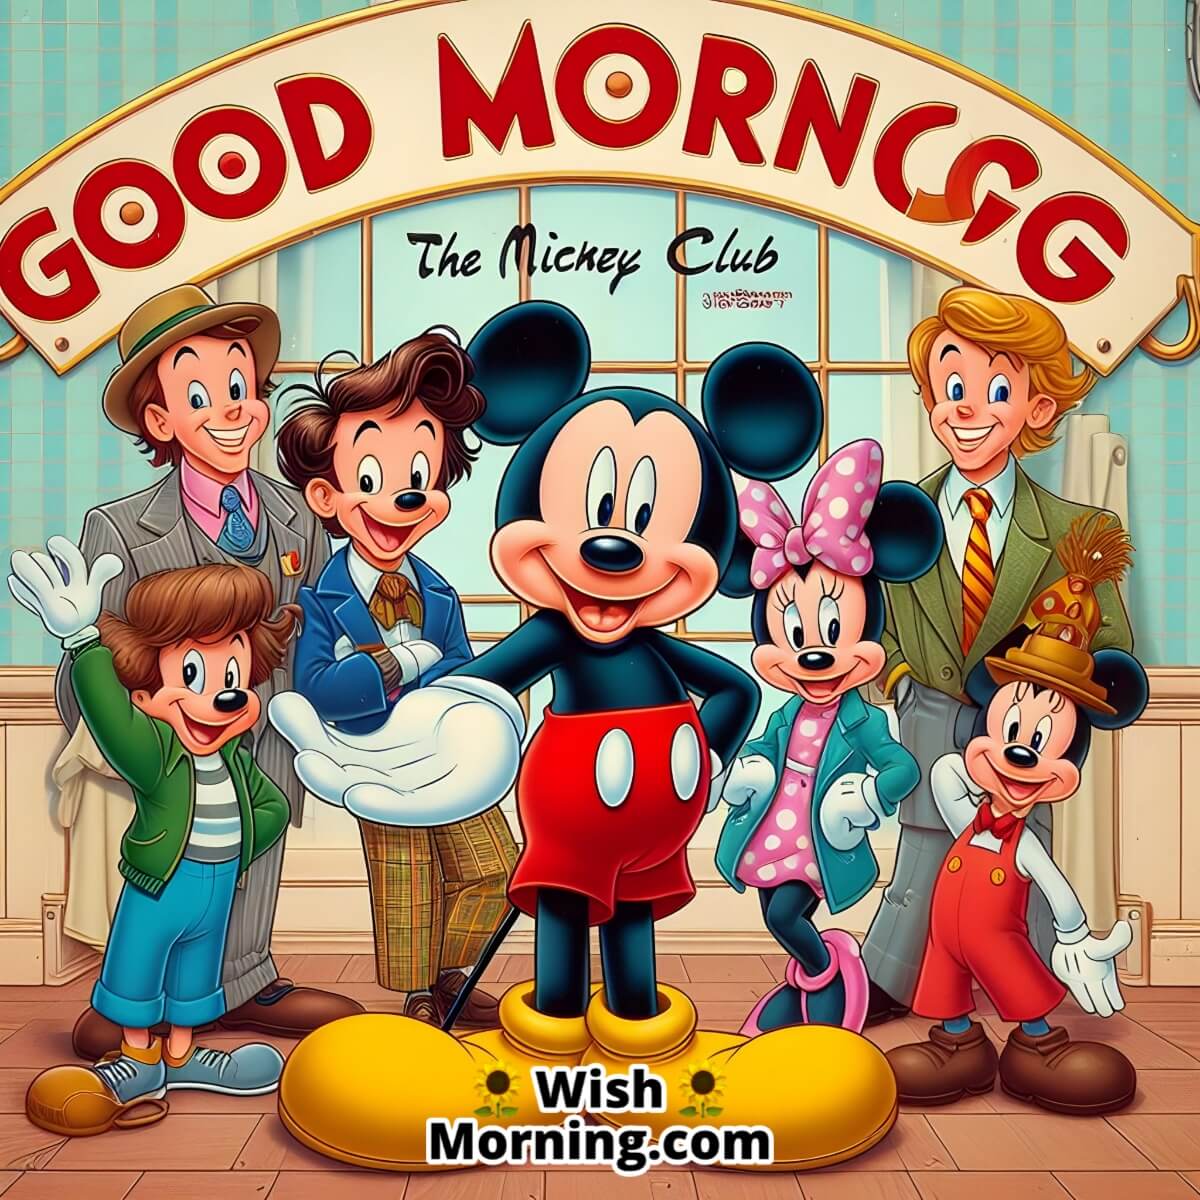 Good Morning The Mickey Club